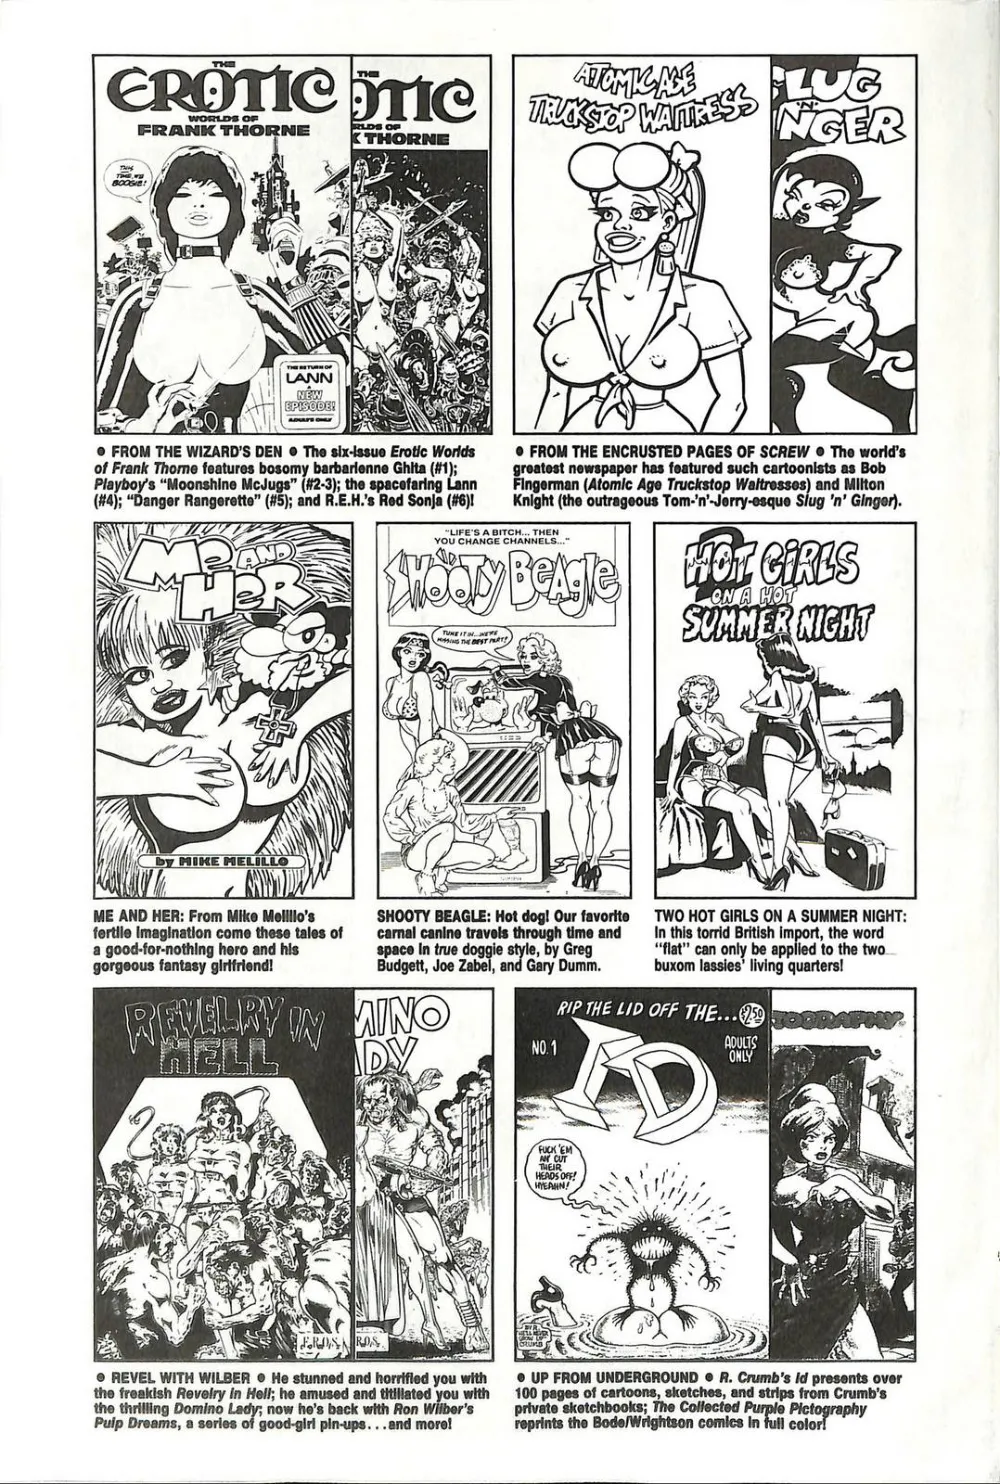 Shooty Beagle No. 3 by Greg Budgett - Page 25